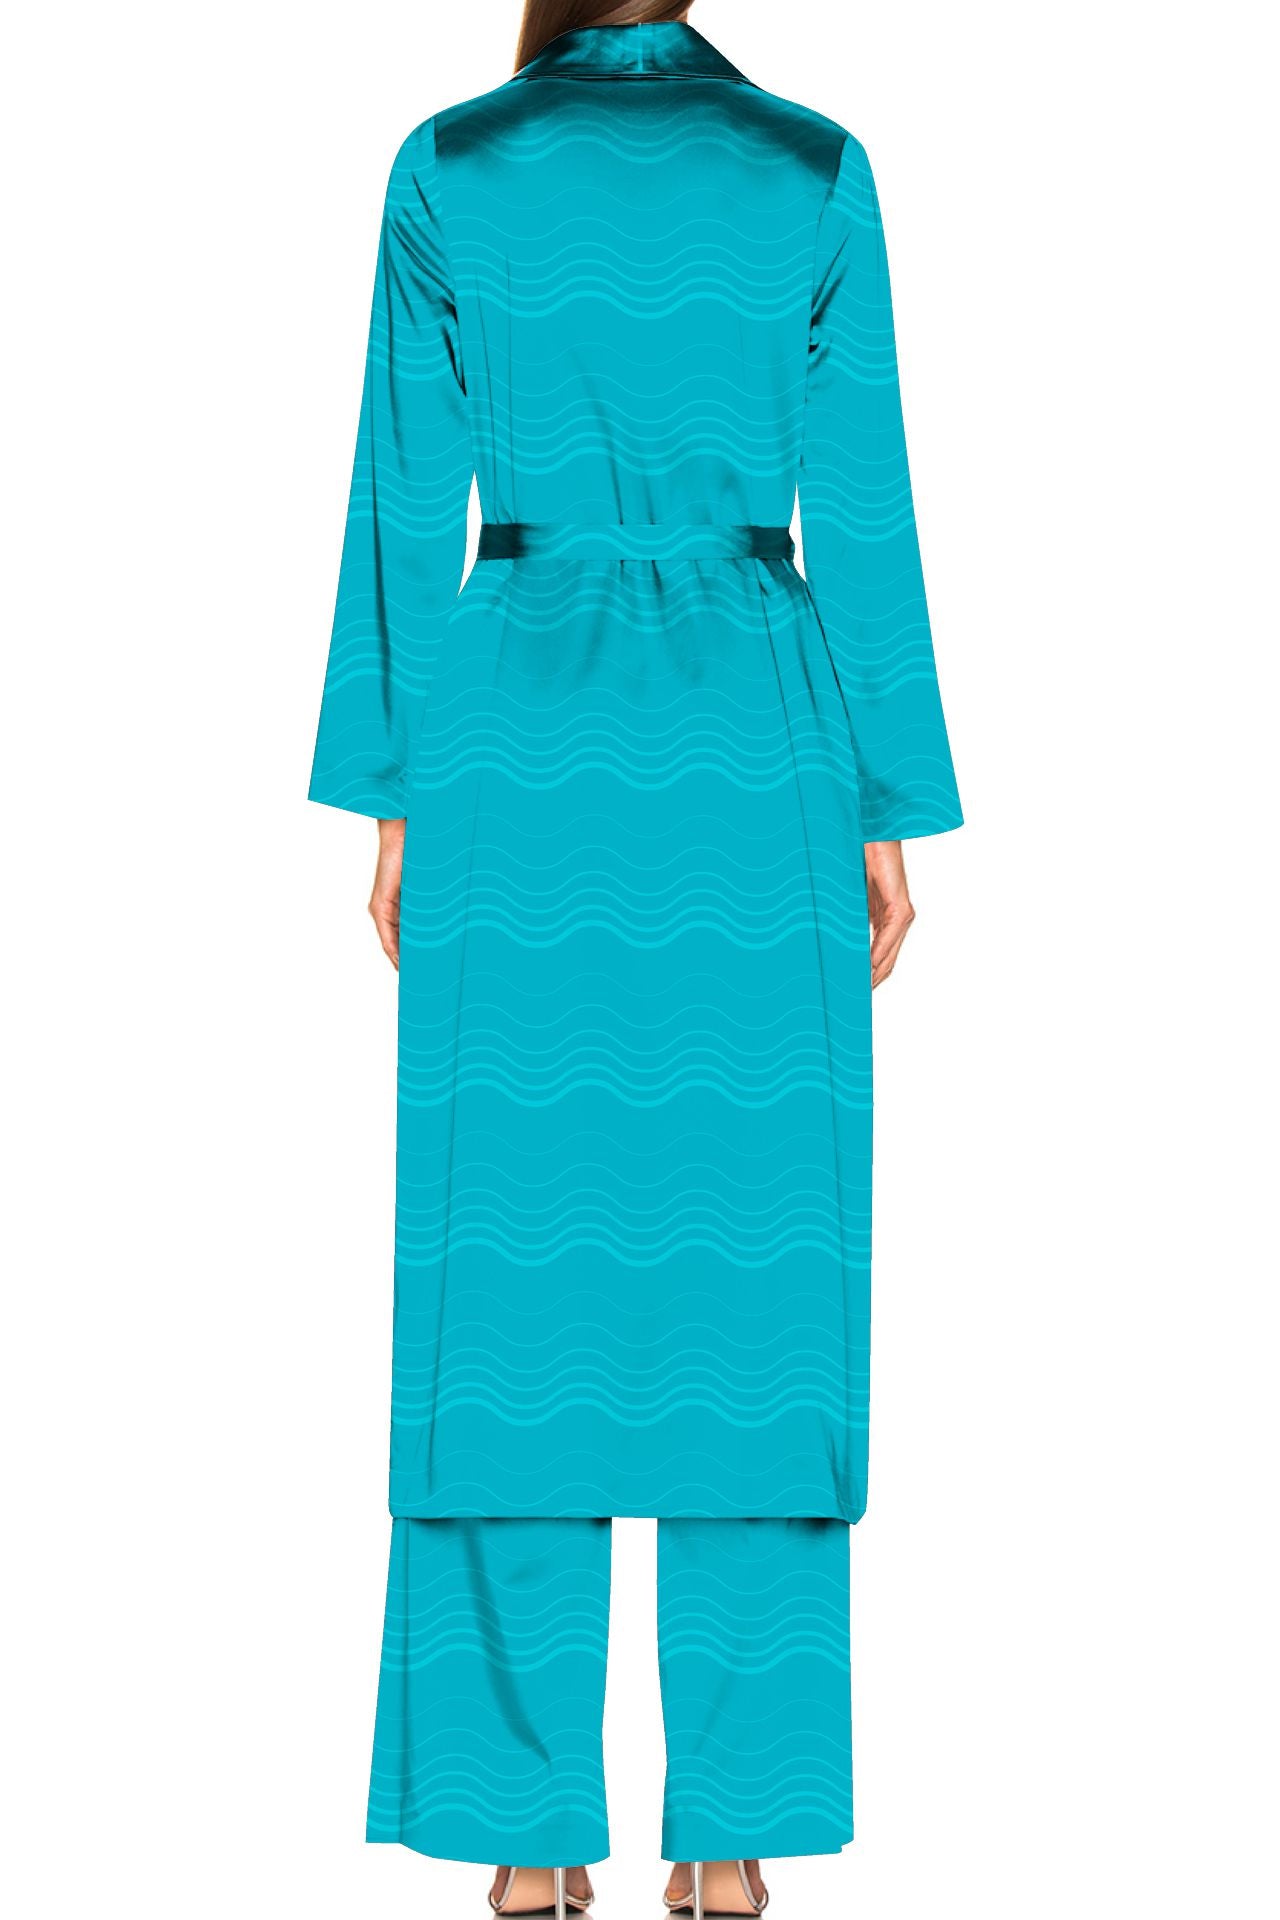 "pajama robe women" "ladies pajamas and robes" "robe set women" "Kyle X Shahida" 